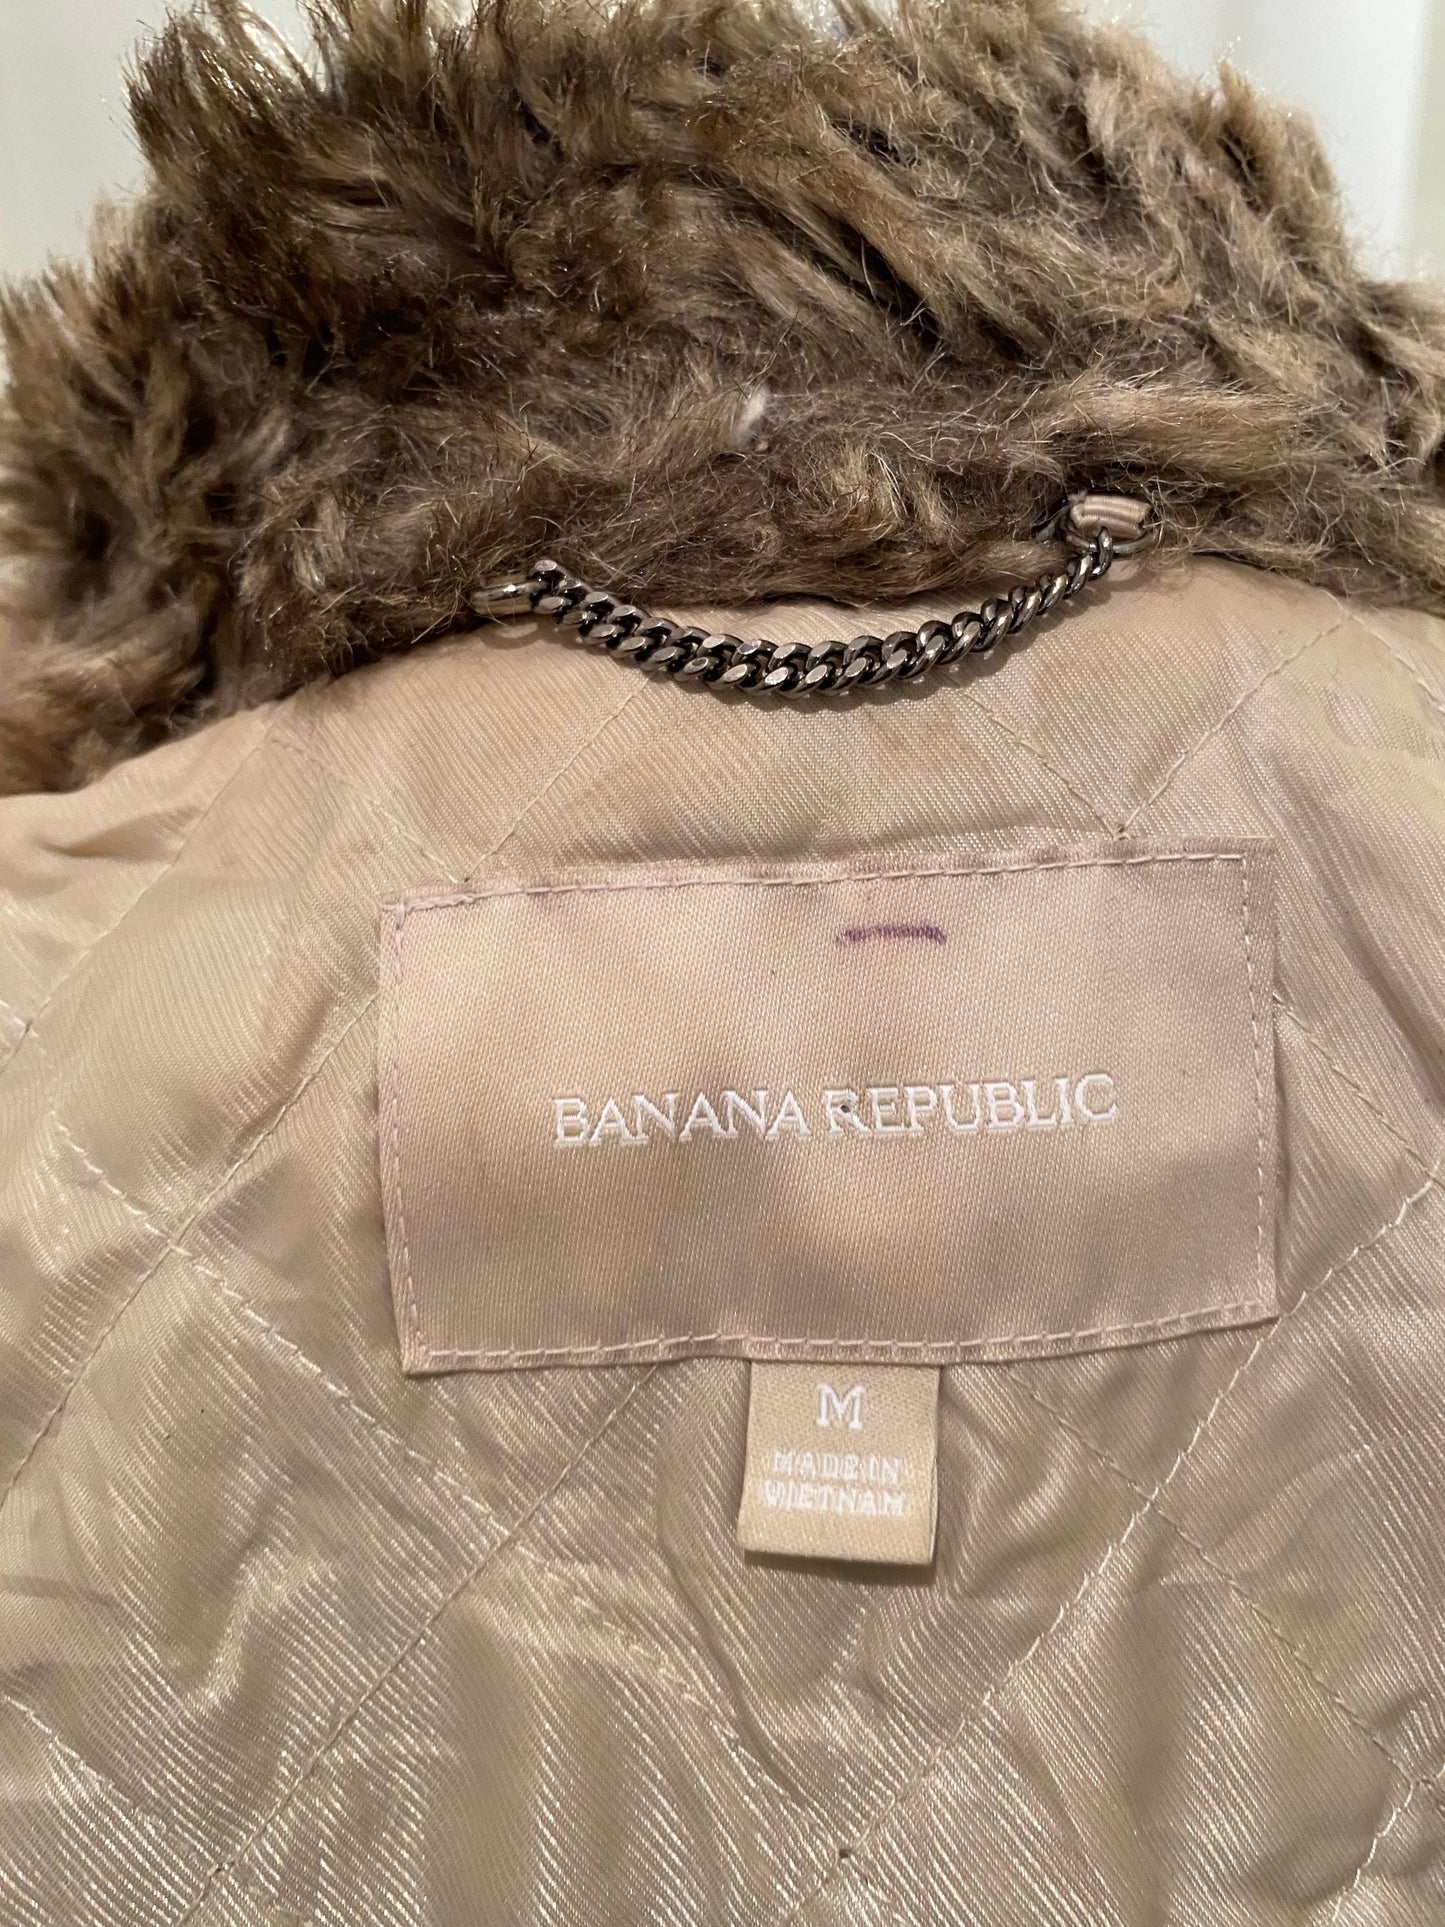 Banana republic, designer vintage